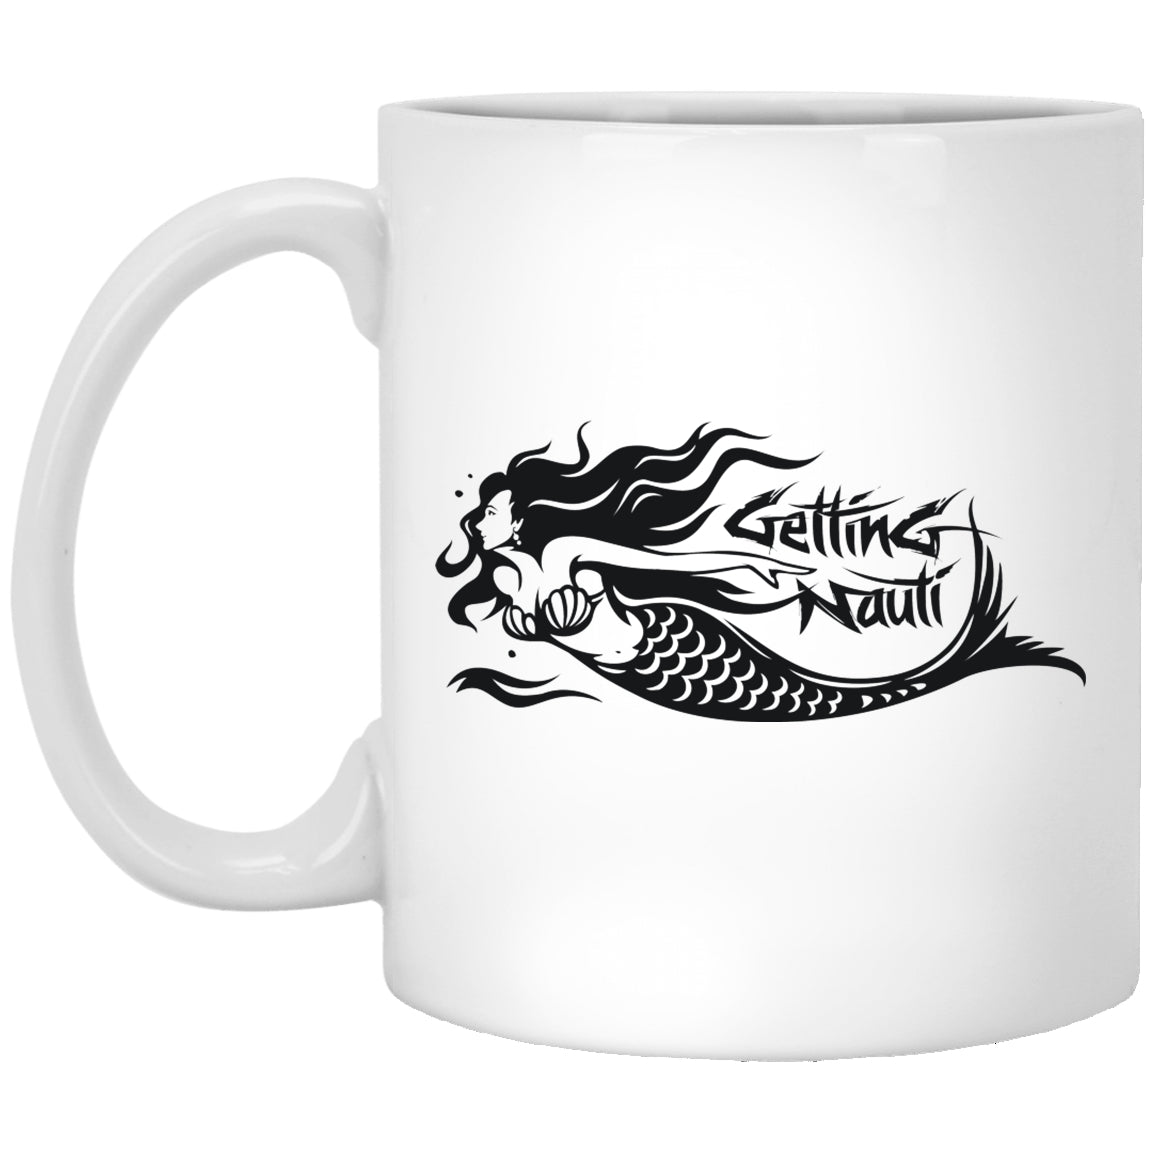 Drinkware - Mermaid Mugs